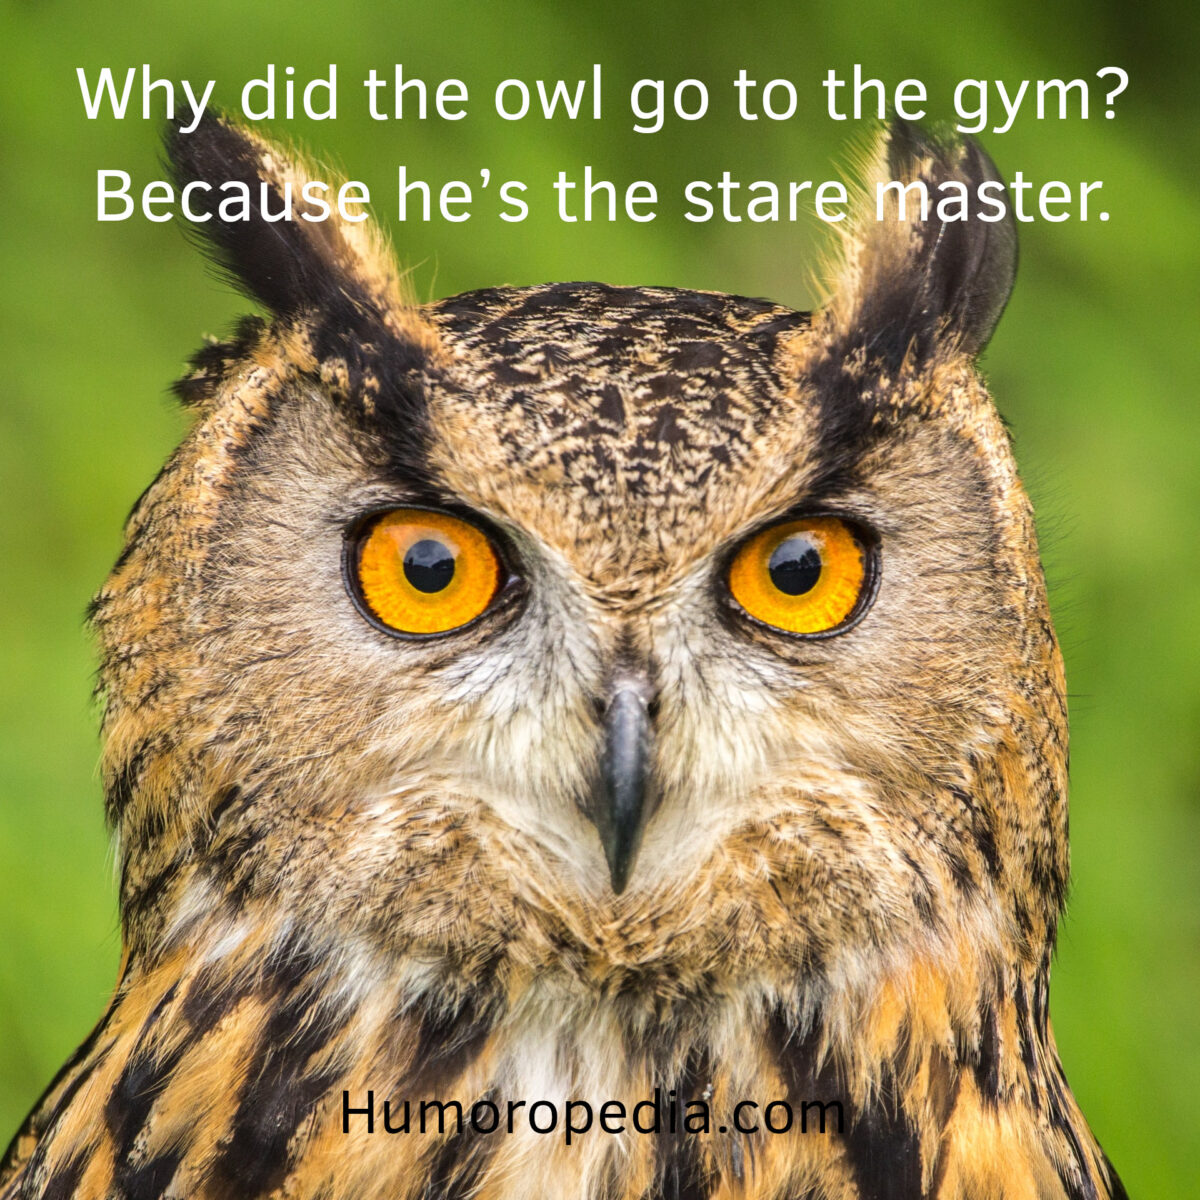 owl joke related to gym